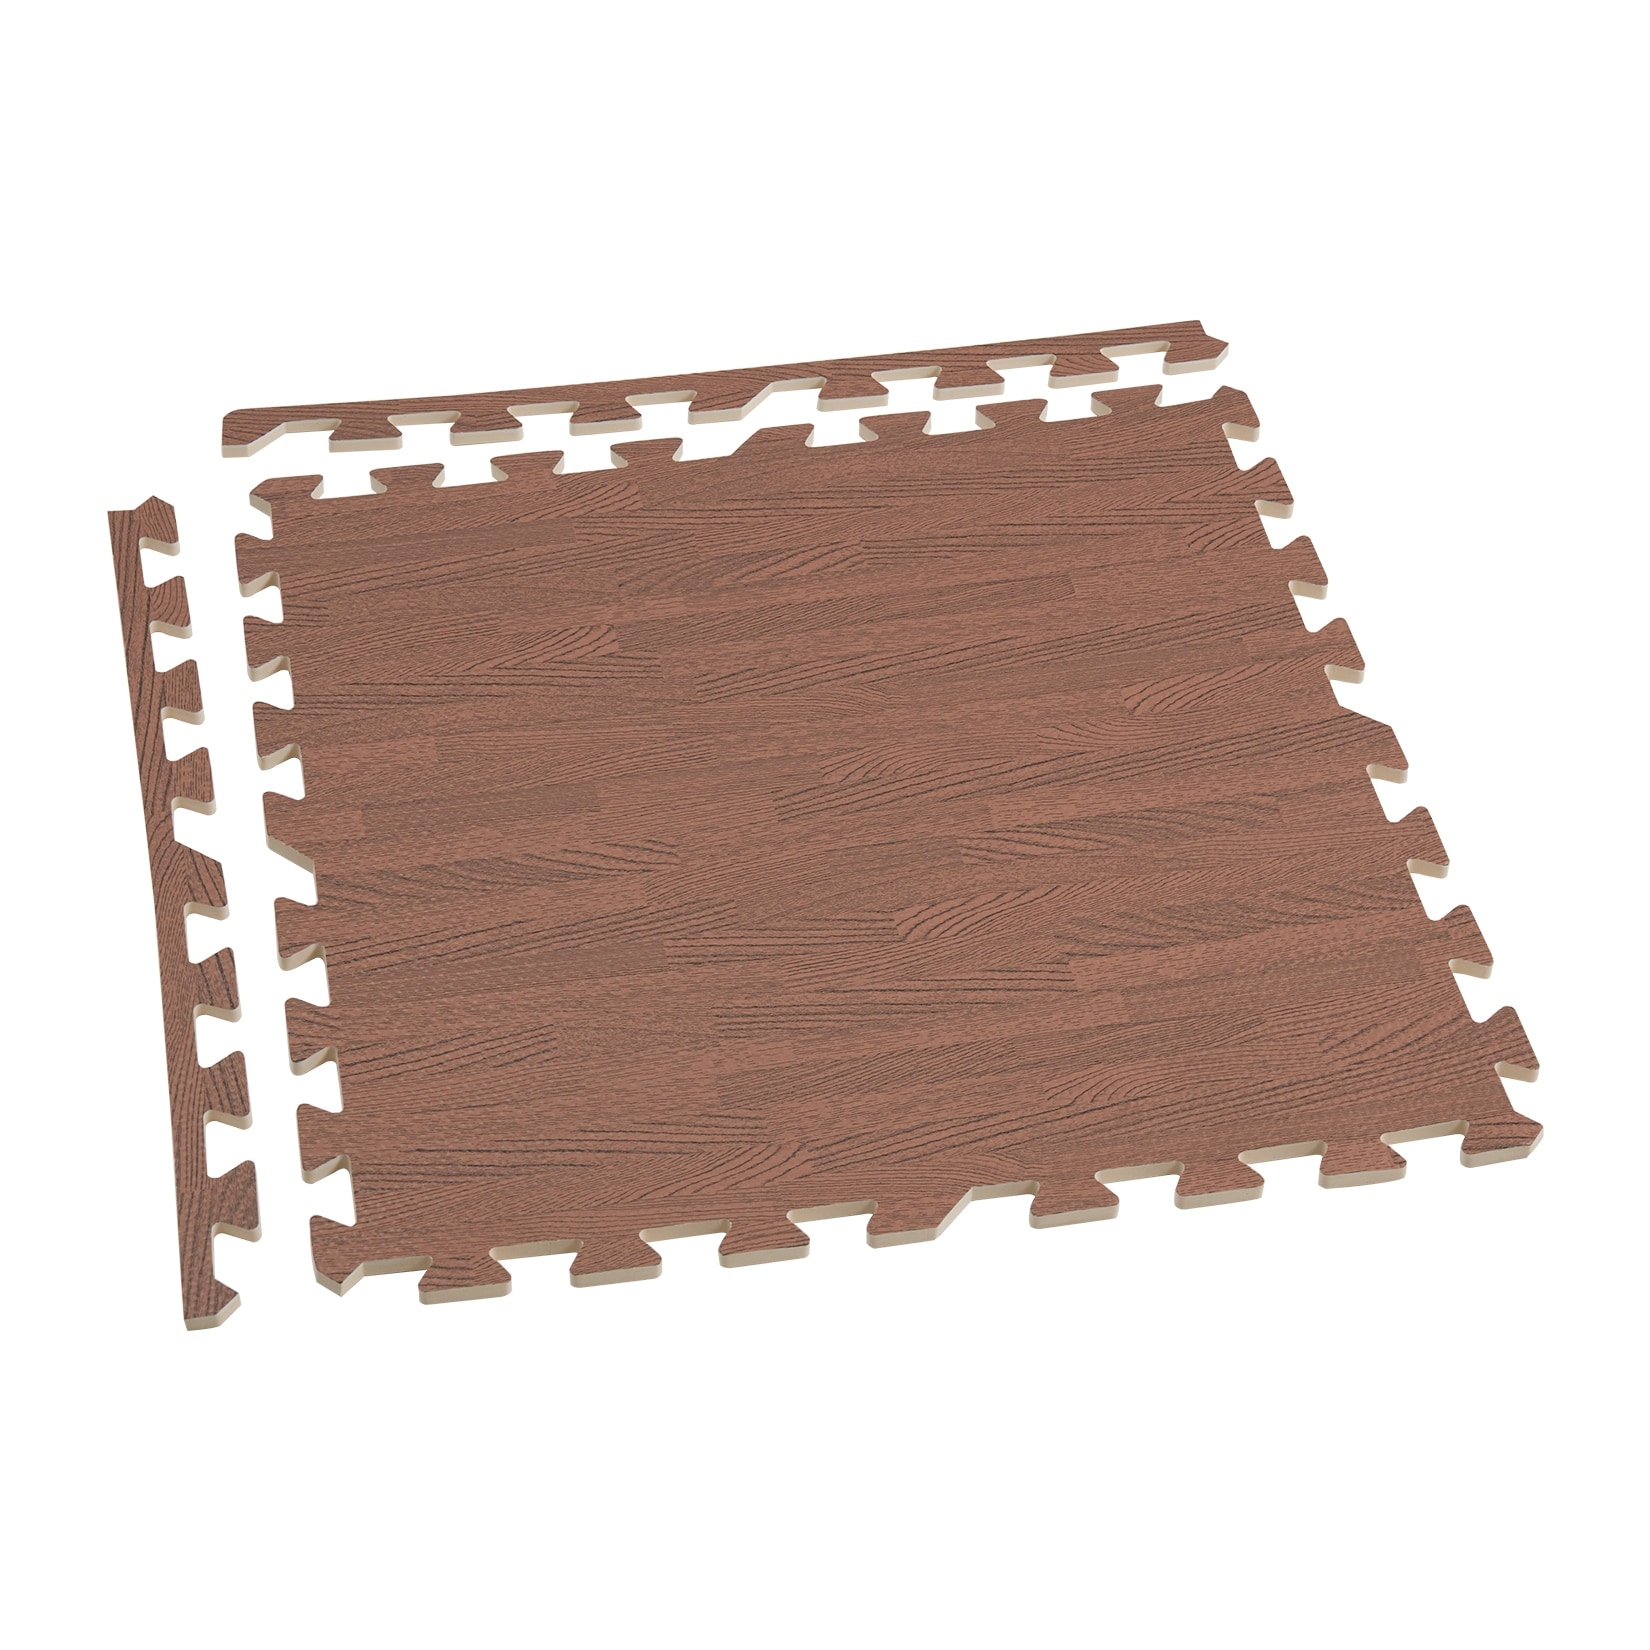 24 Pcs (4x6 Arrangement) Multicolor Puzzle Floor Mats, 12 X 12 EVA Foam  Interlocking Tiles, Comfortable Exercise and Play Mat, 0.47 Thick(Color:14)